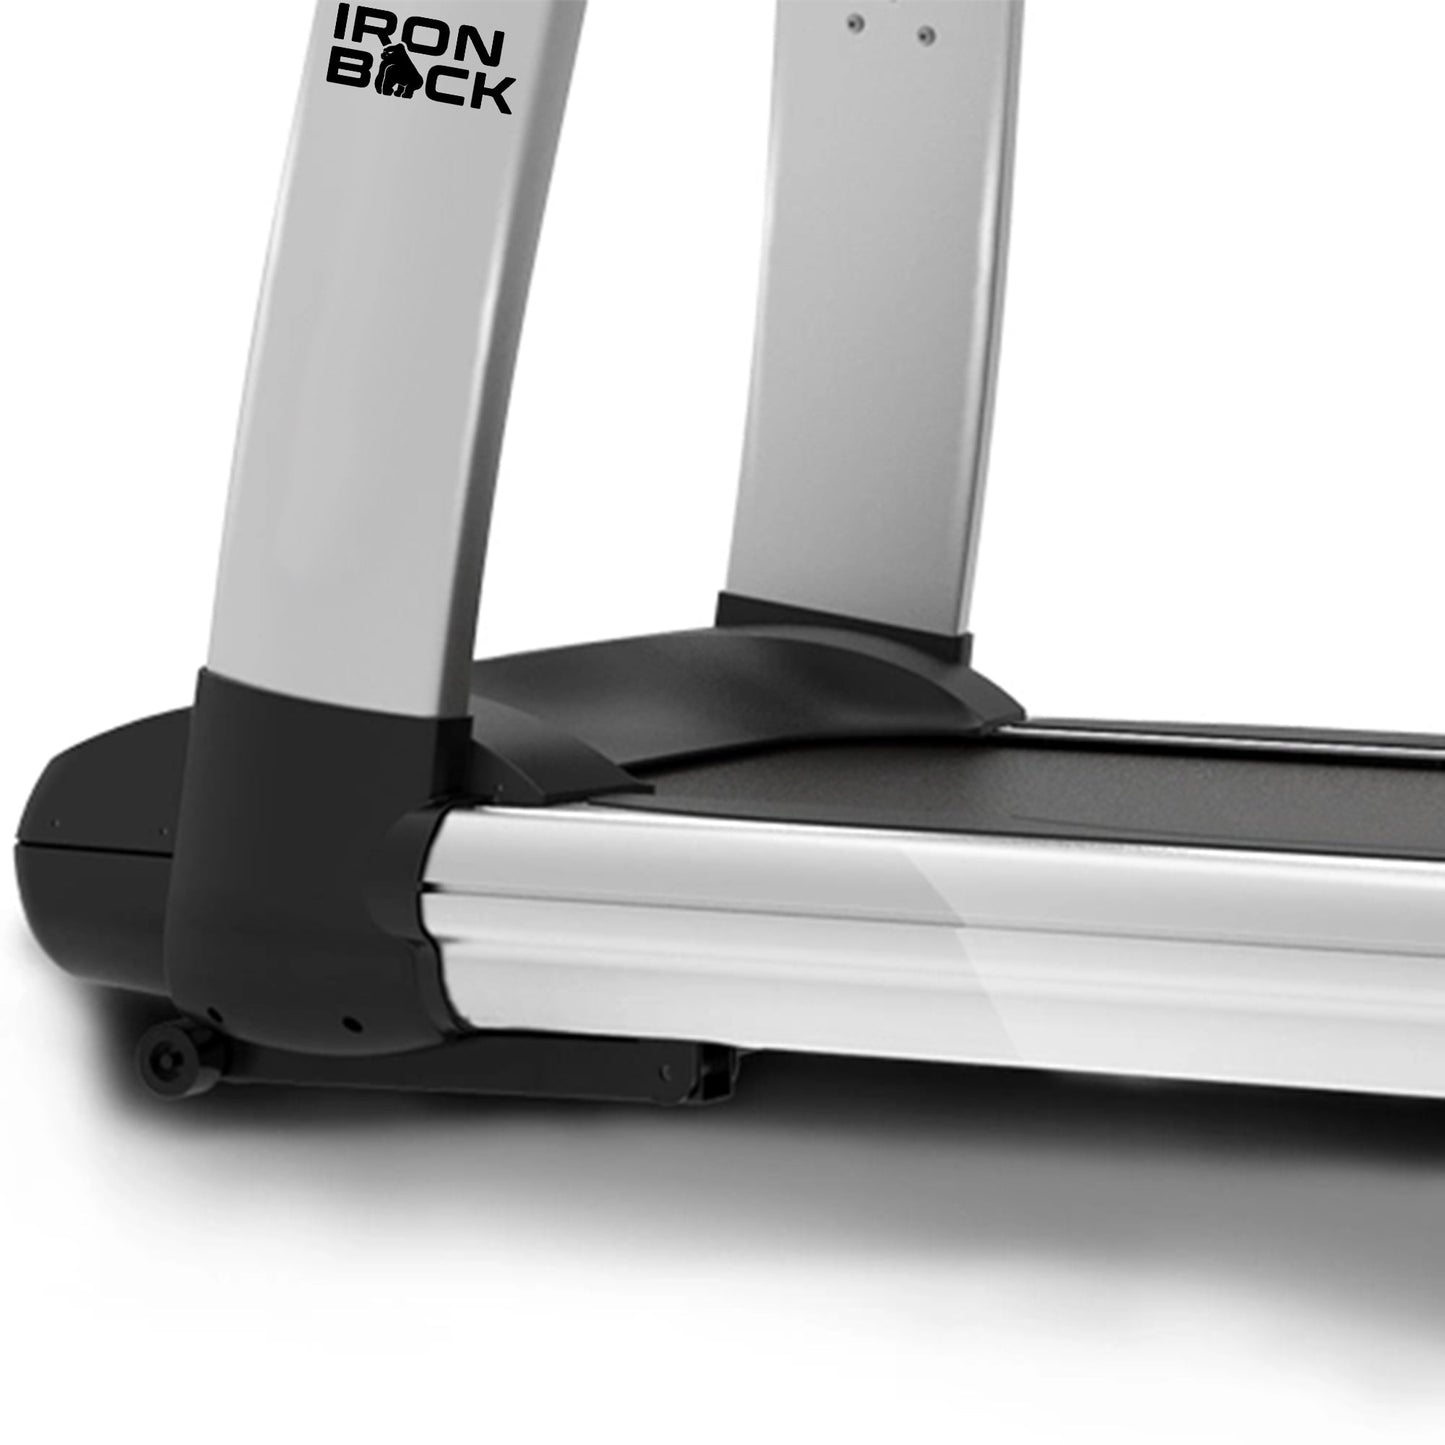 Ironback Commercial Treadmill Ironback